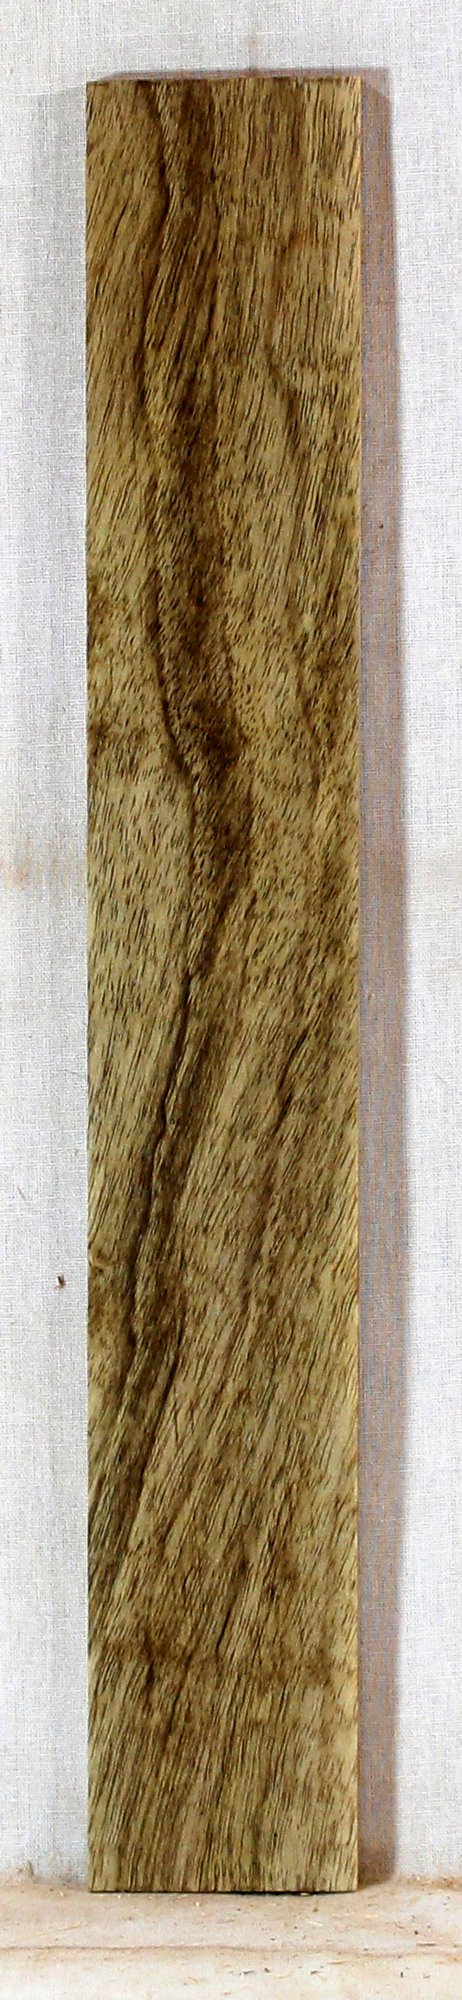 Myrtle Ukulele Fingerboard Stabilized (EH32)